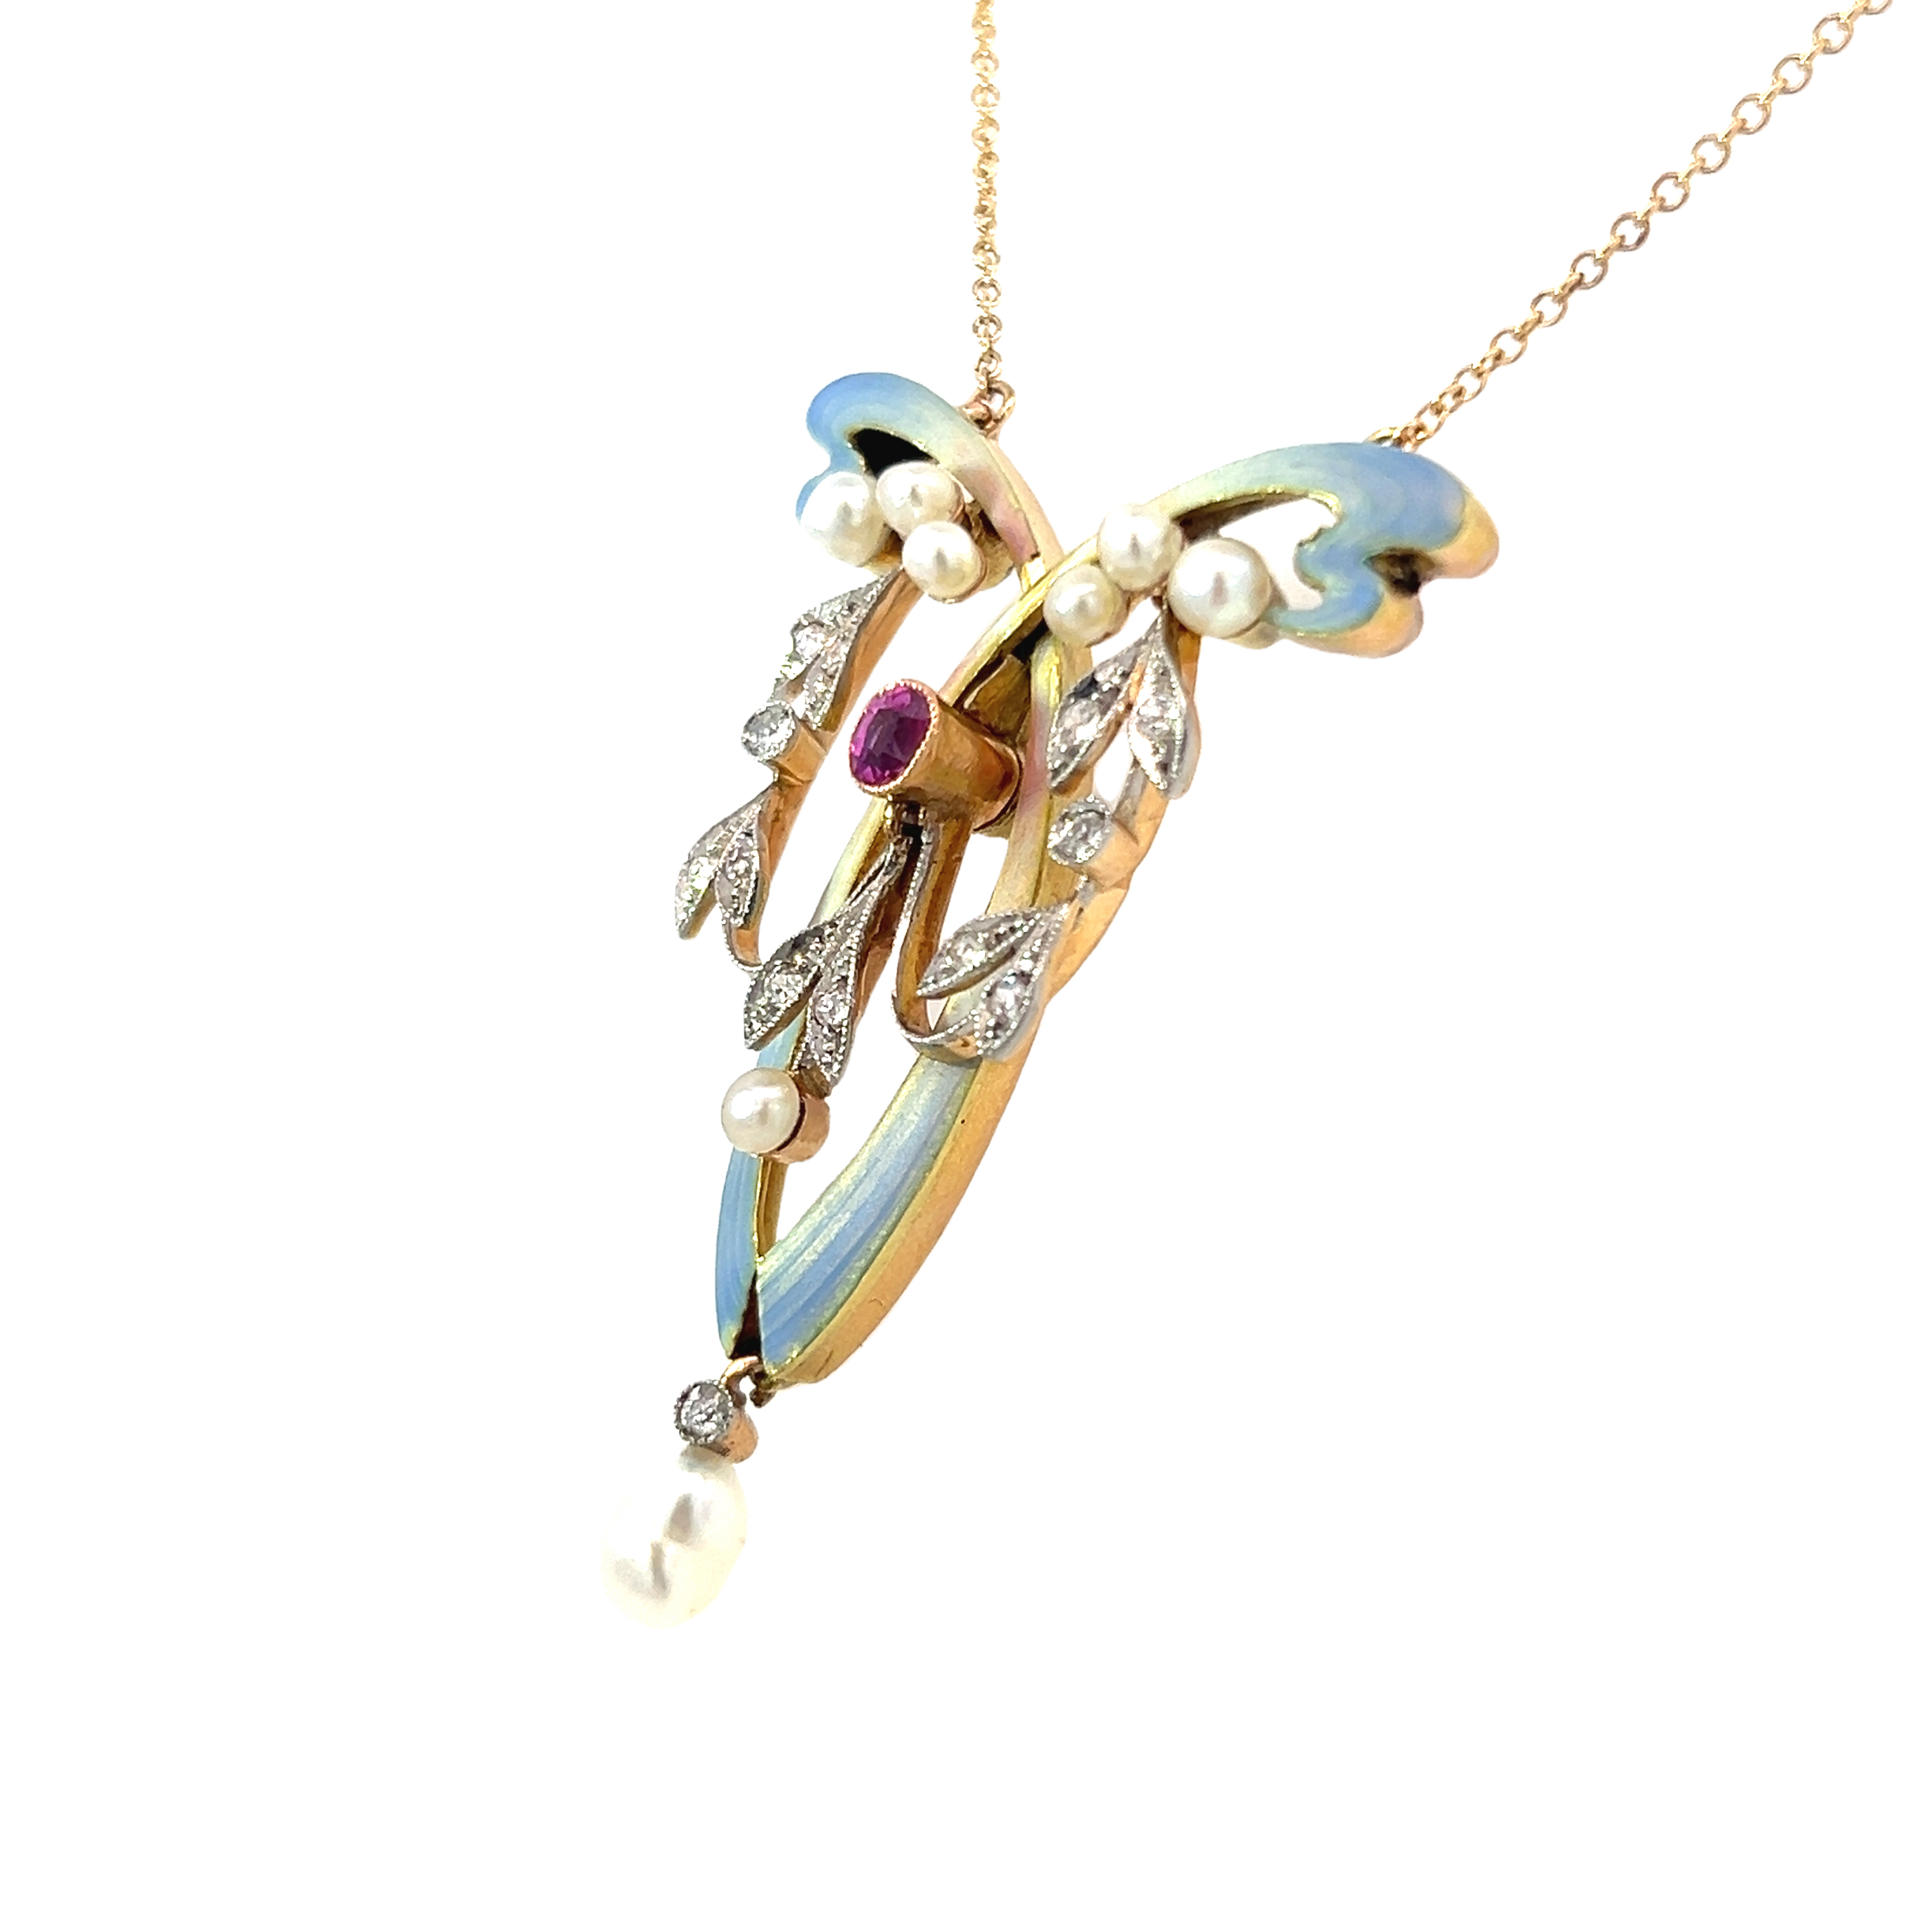 A Stunning Art Nouveau Sapphire and Diamond Pendant